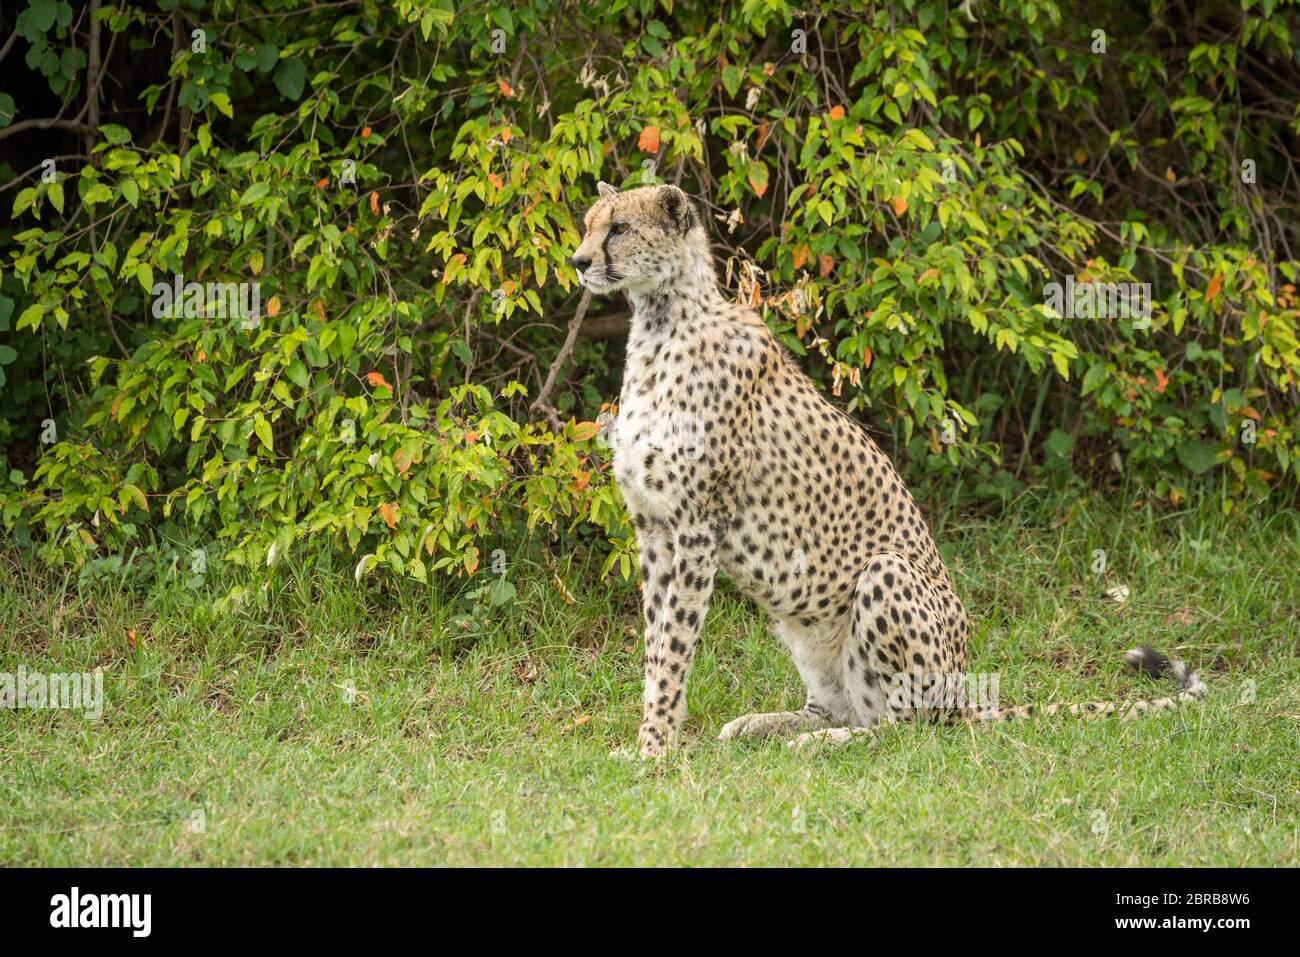 Cheetah sits on grass near leafy bush Stock Photo